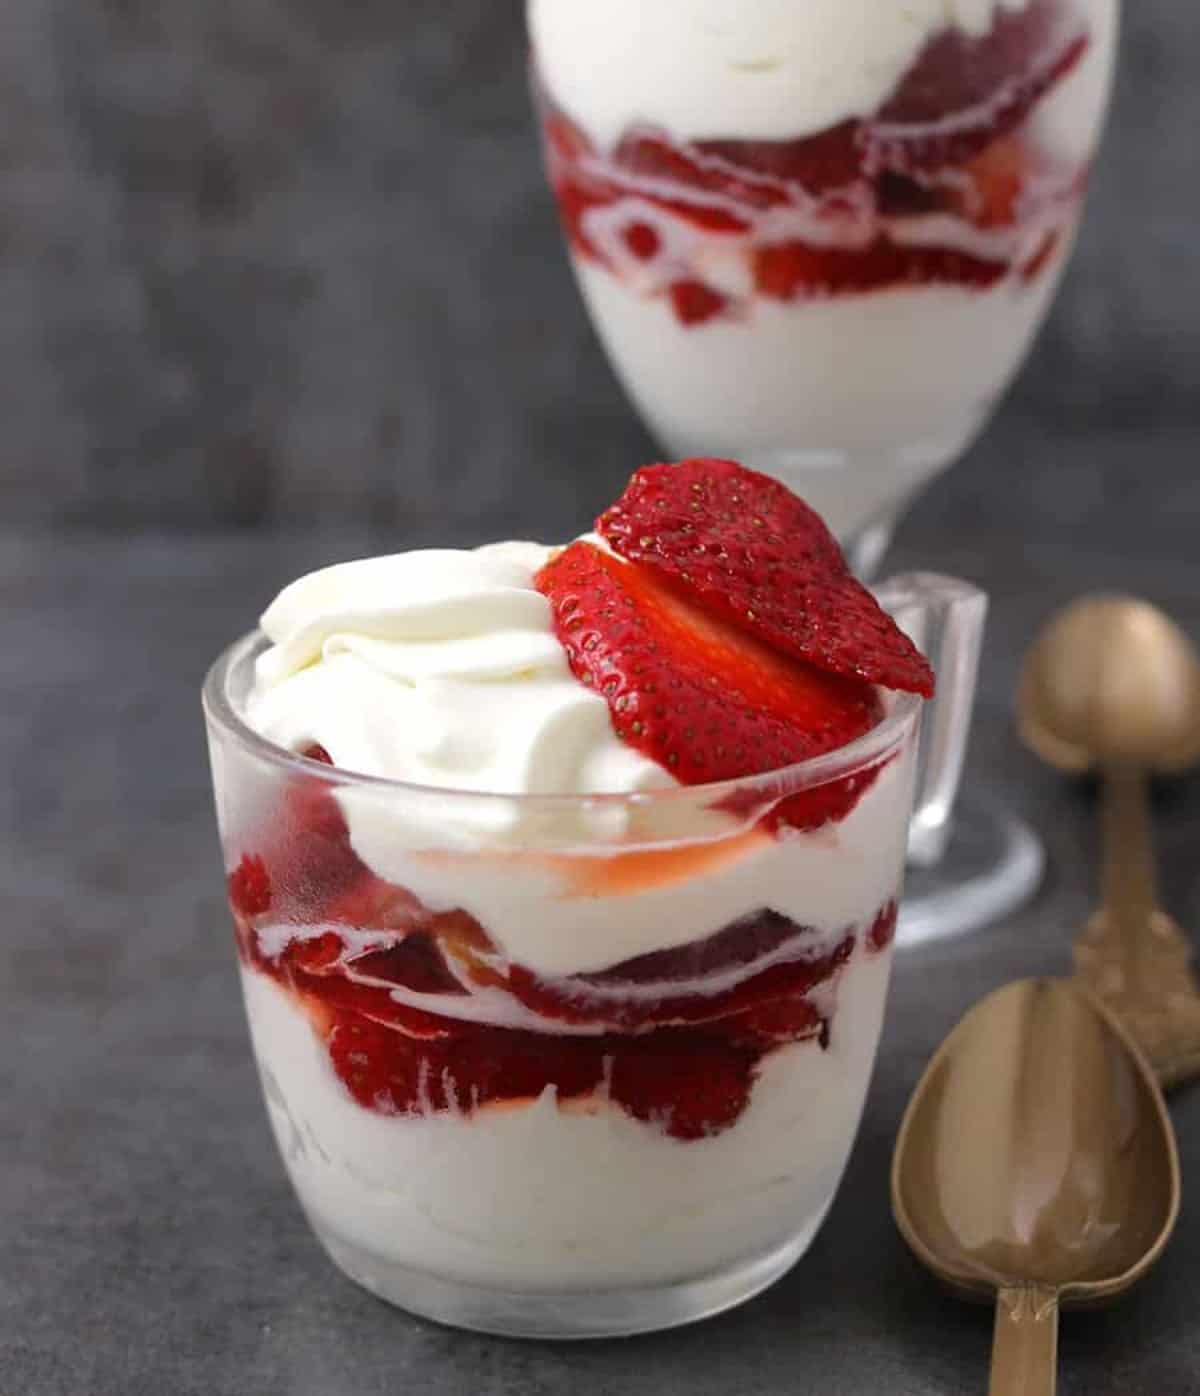 Best strawberry parfait served in a glass dessert cup.